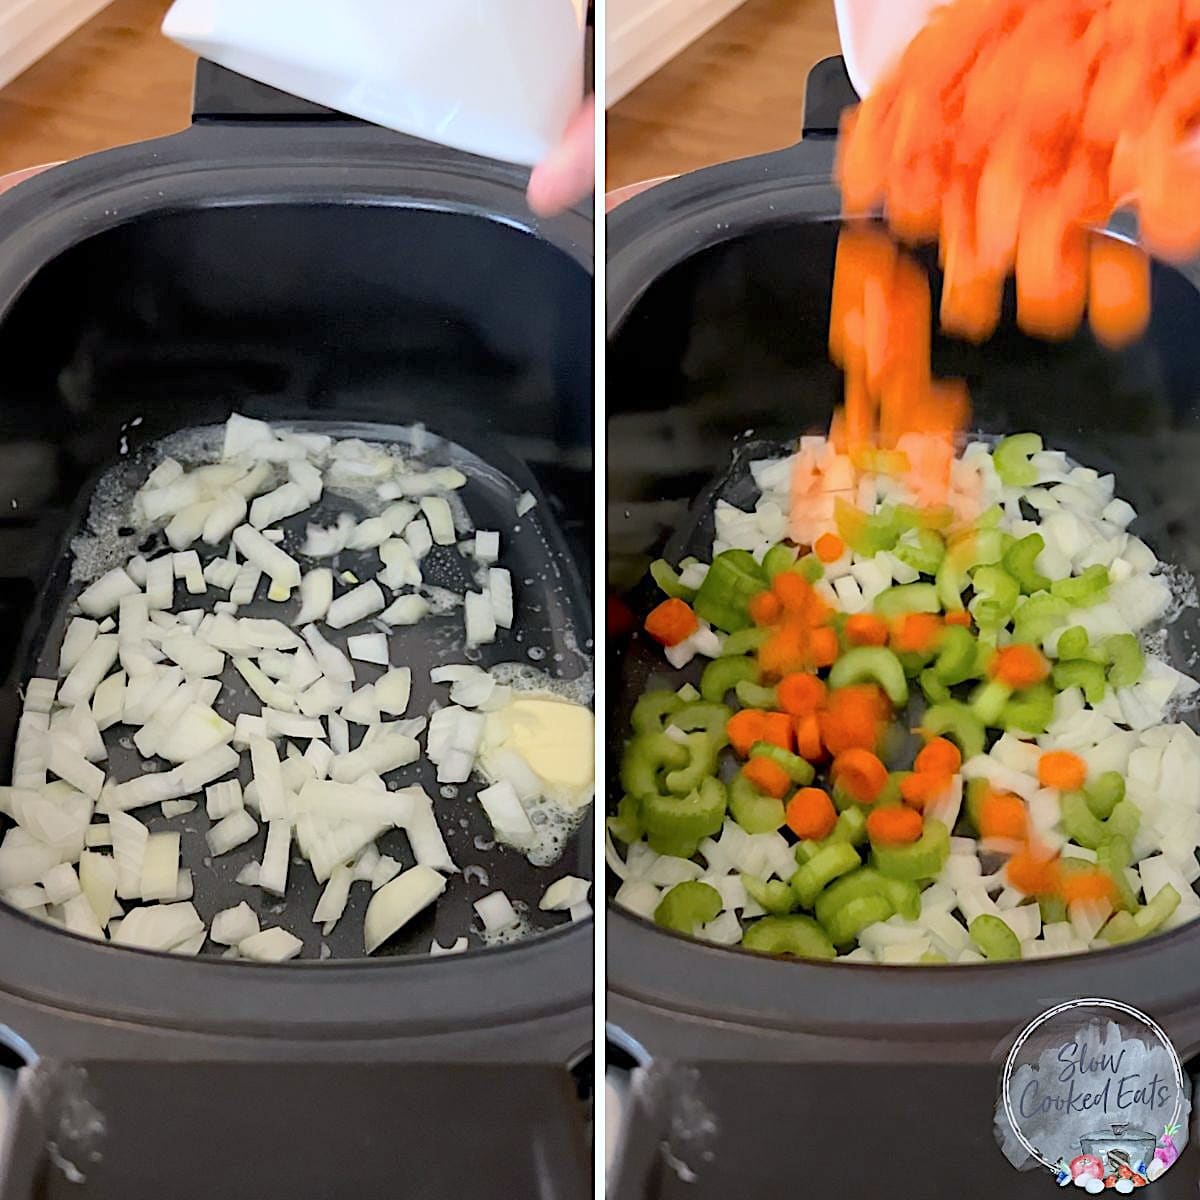 Adding the vegetables to make crockpot chicken noodle soup.